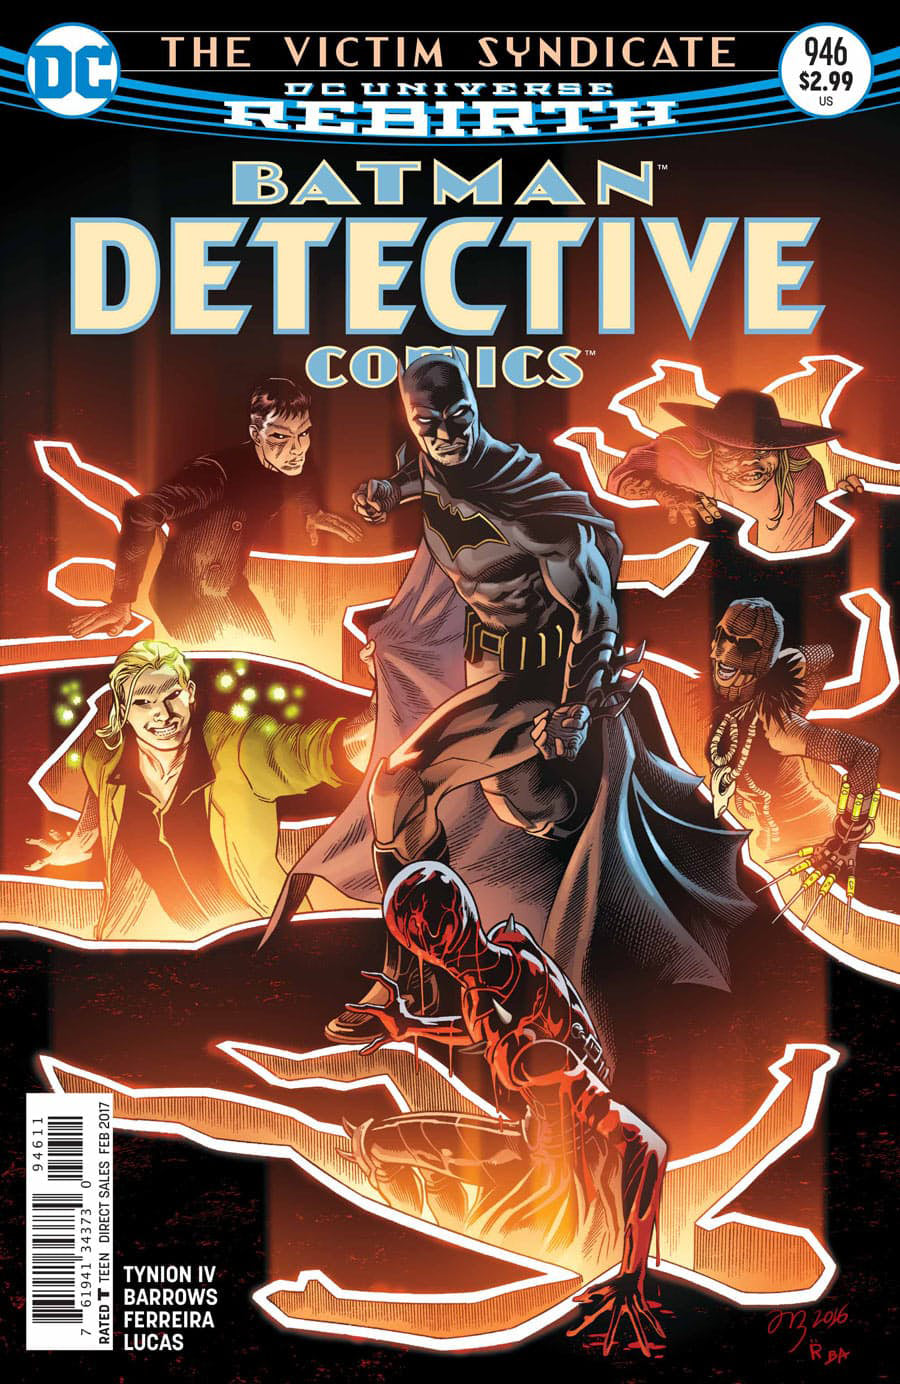 DETECTIVE COMICS #946 | Game Master's Emporium (The New GME)